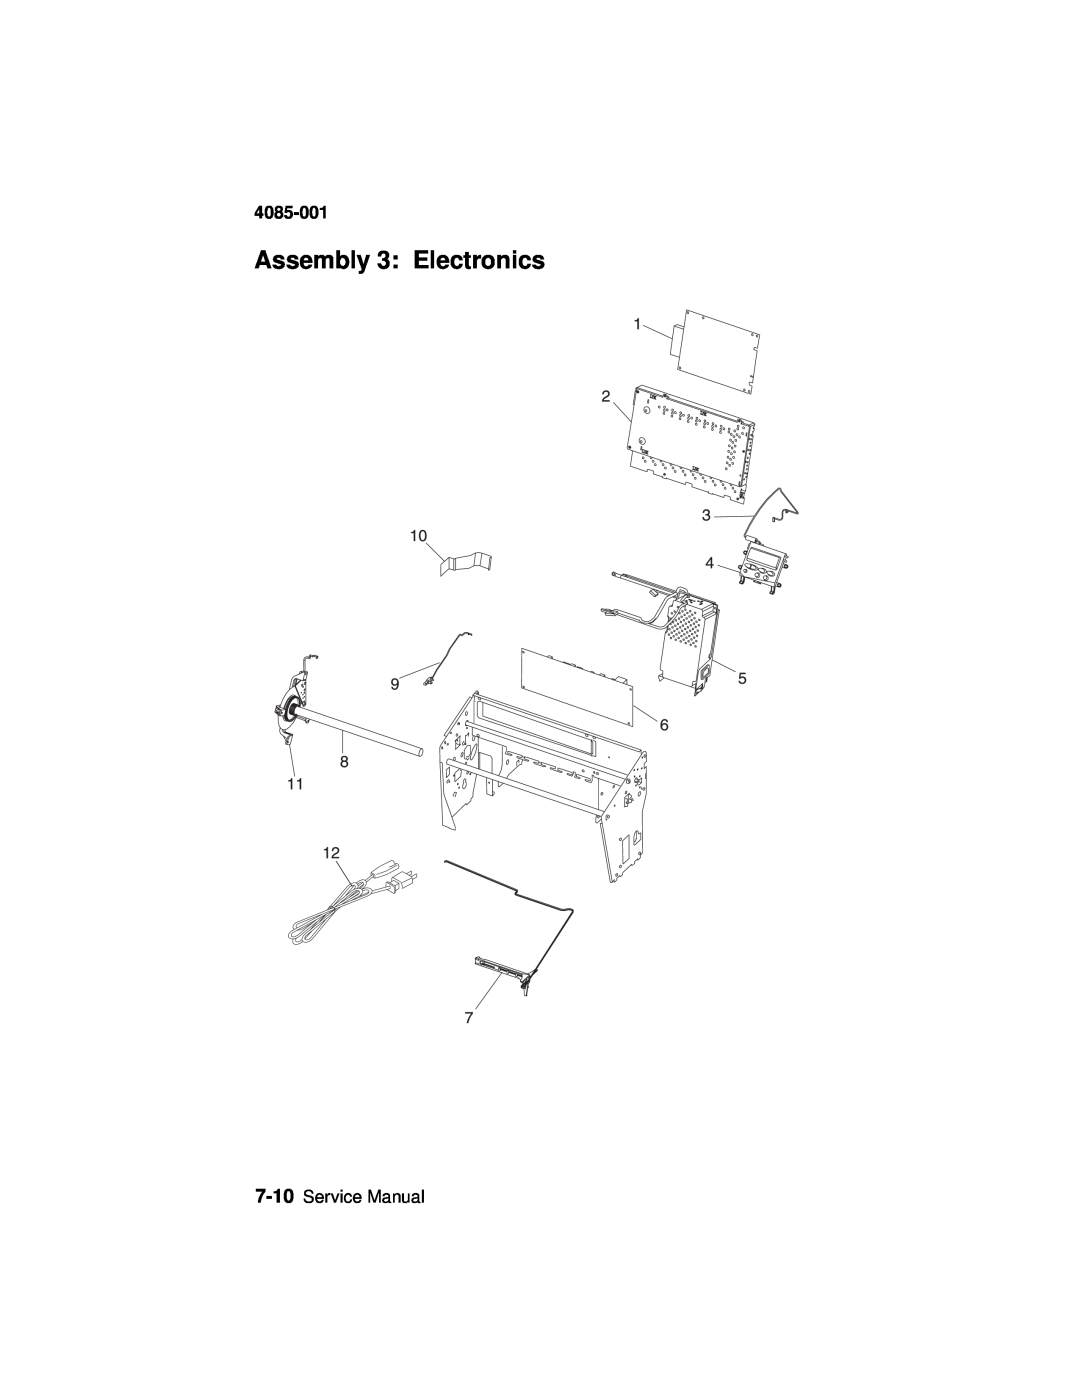 Lexmark J110, Printer manual Assembly 3: Electronics, 4085-001, Service Manual 